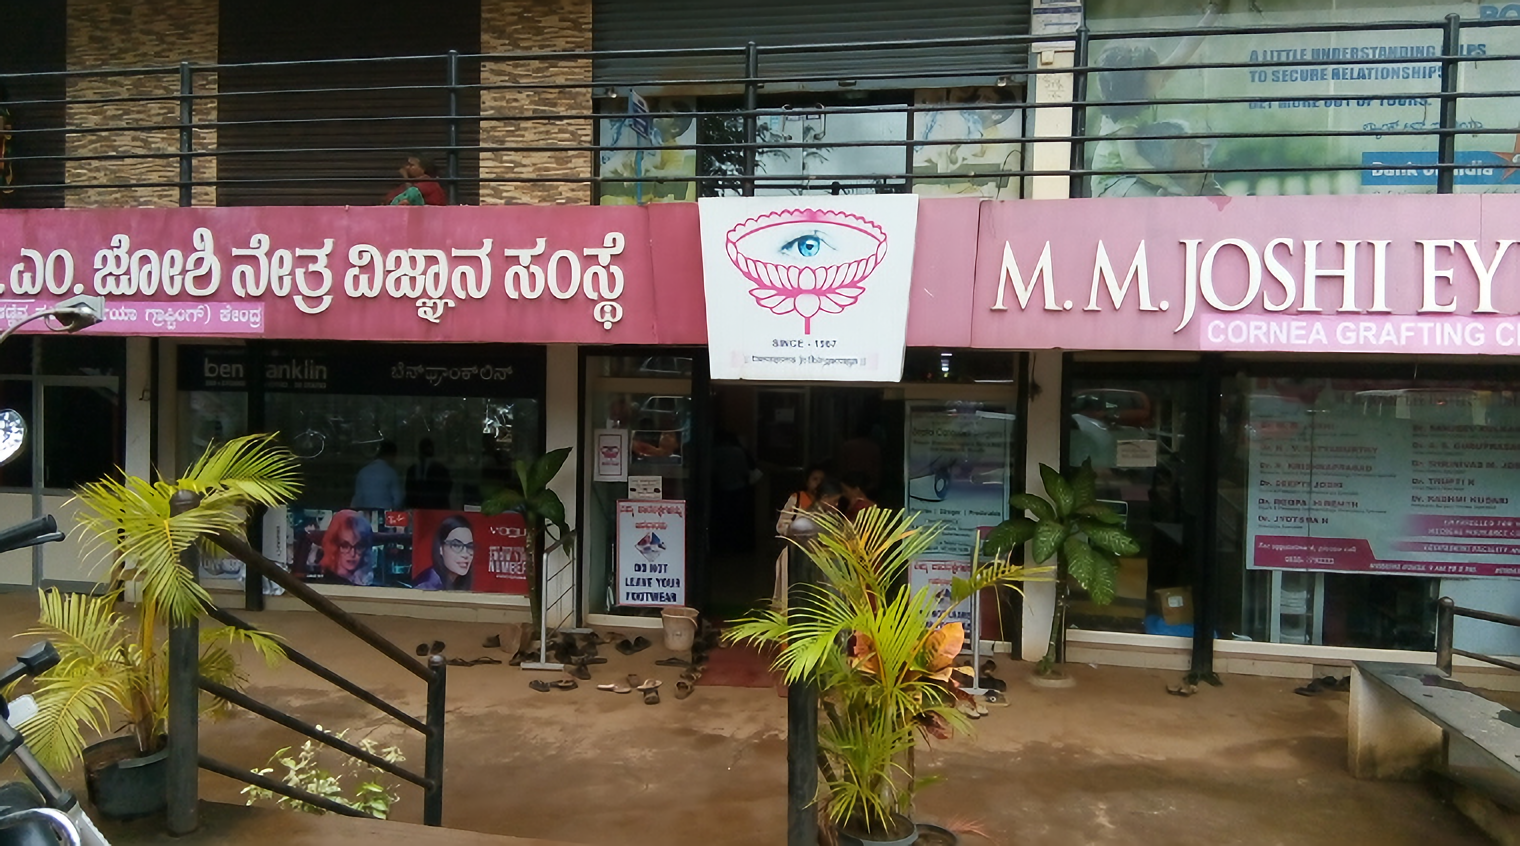 M. M. Joshi Eye Institute